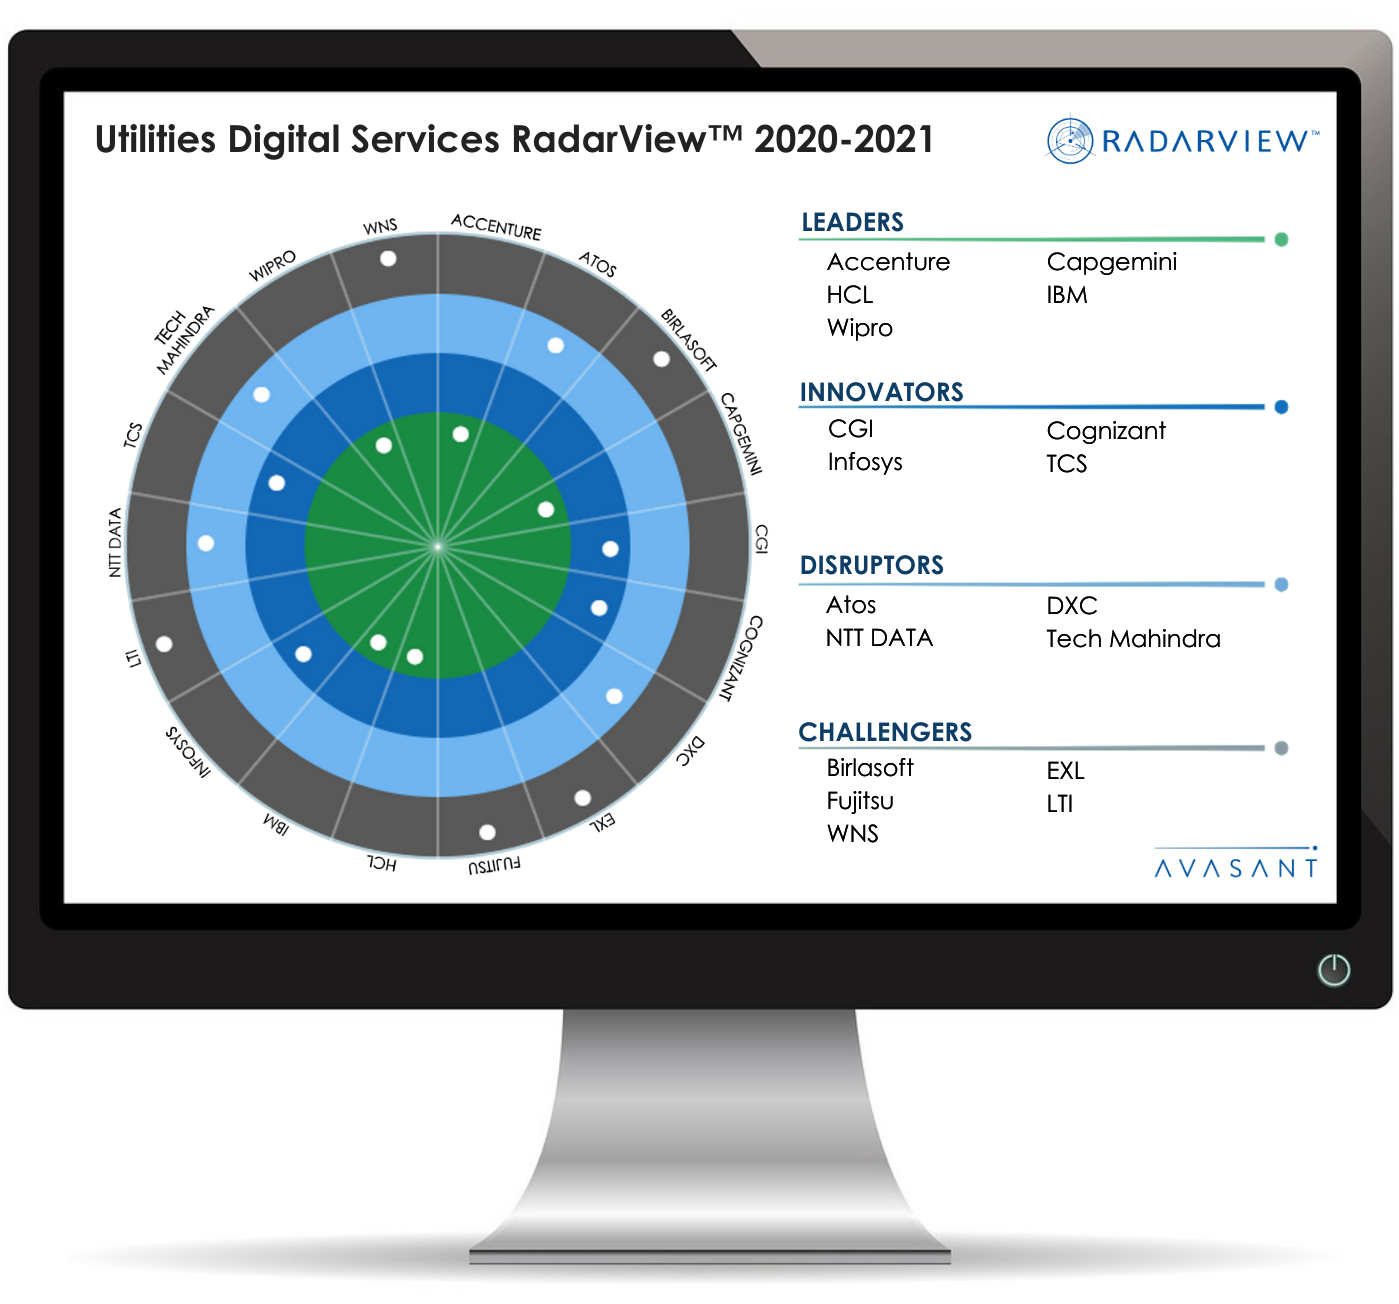 Utilities RV 1 - Utilities Digital Services RadarView™ 2020-2021 - Birlasoft